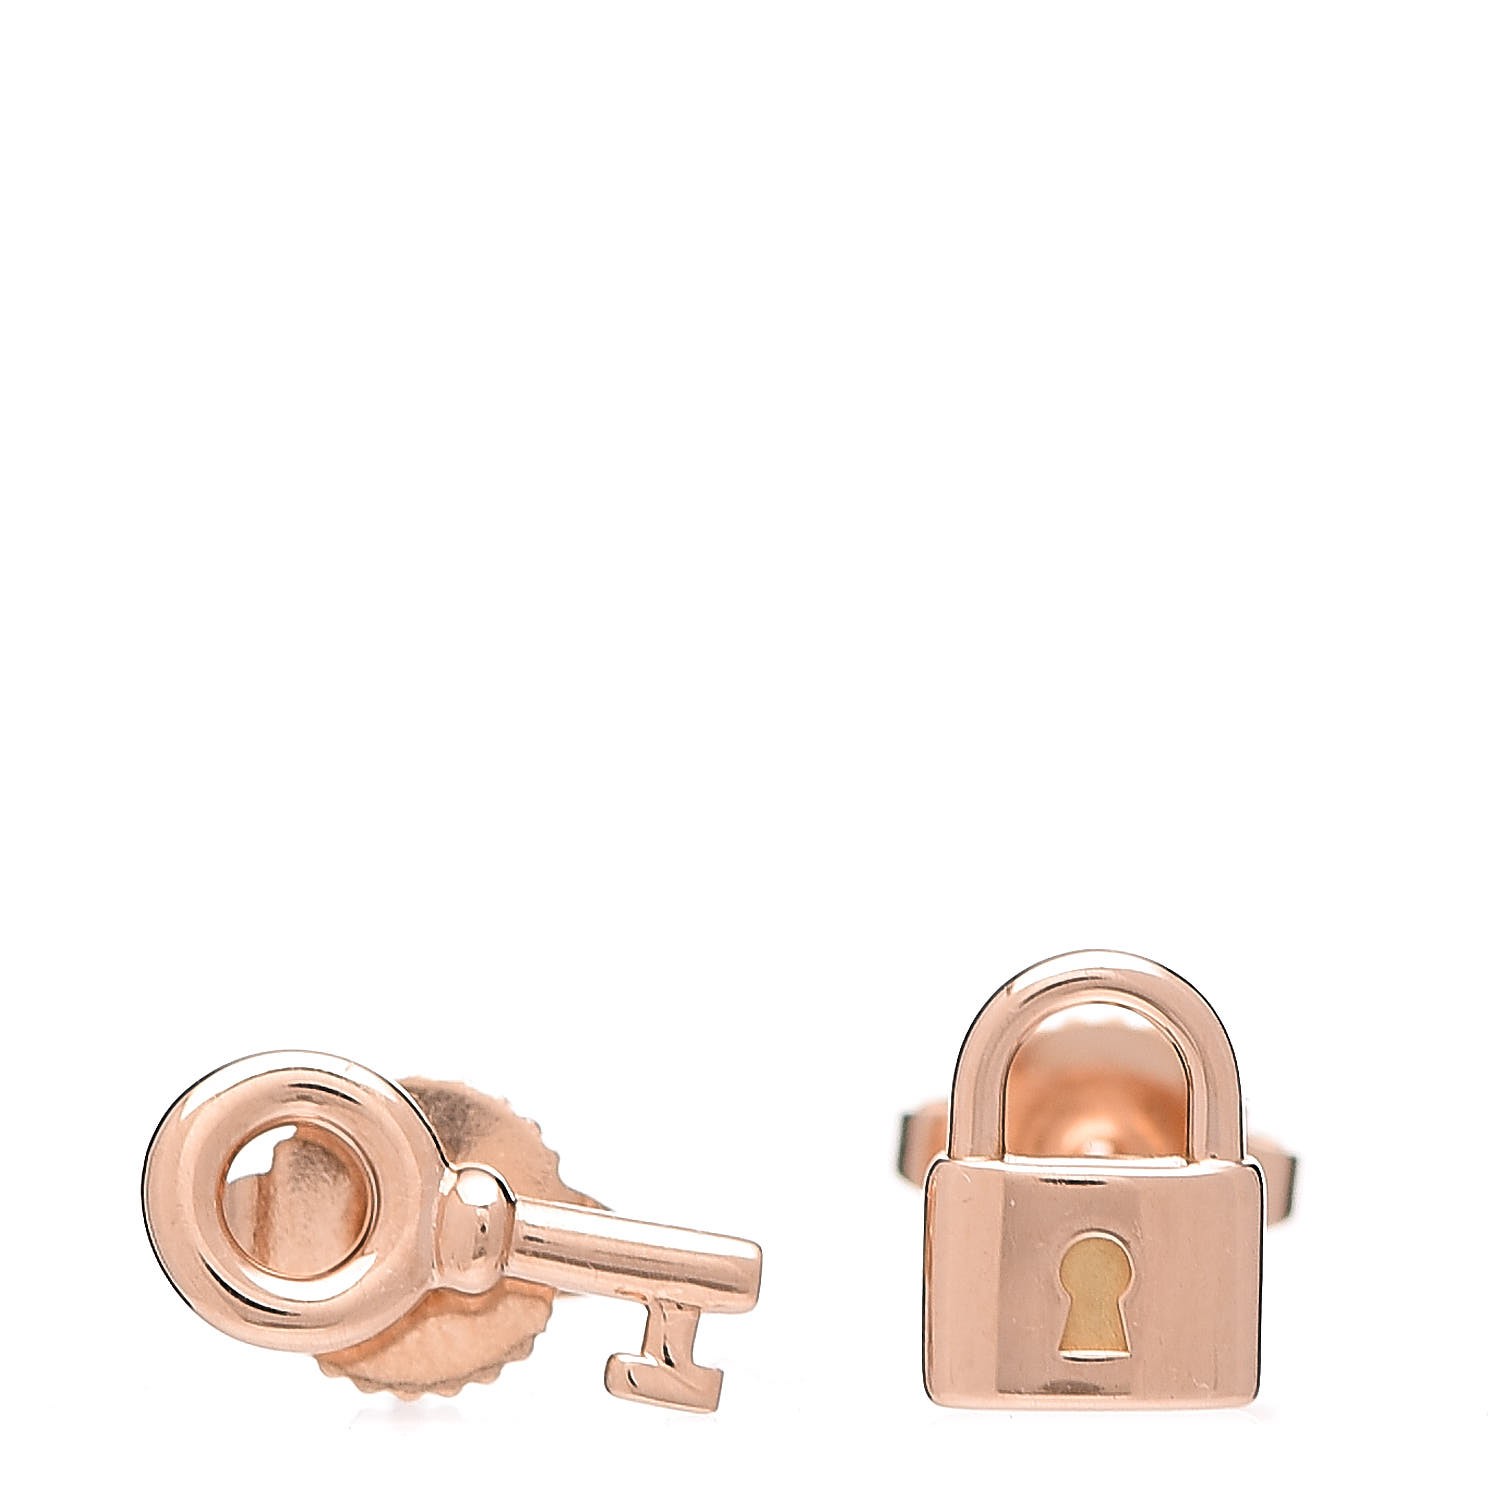 tiffany lock and key earrings